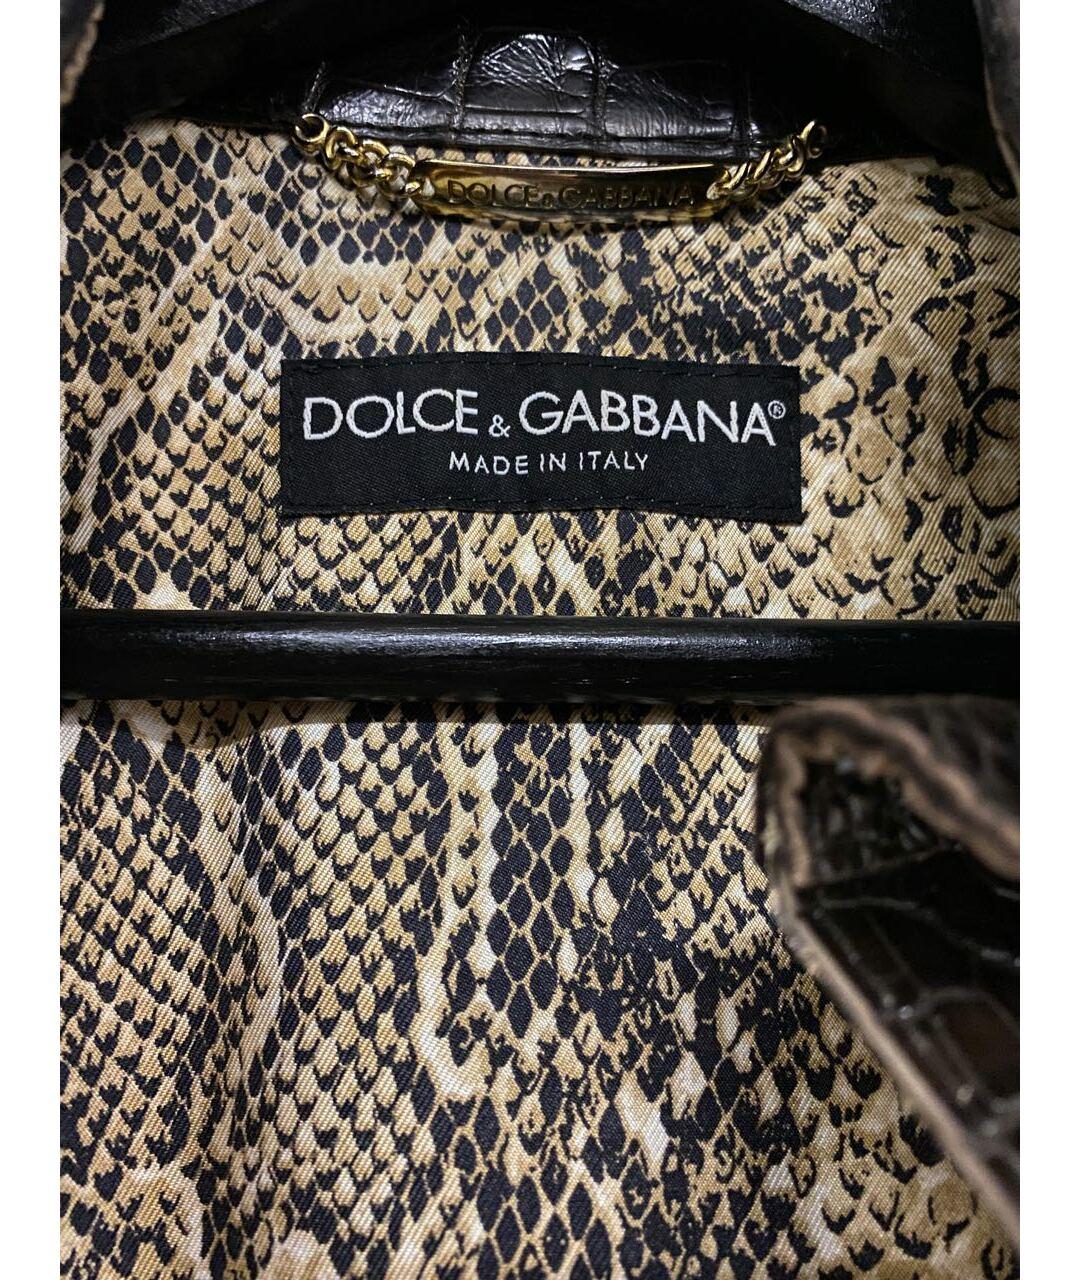 S/S 2005 Dolce & Gabbana python and alligator skin trench 1